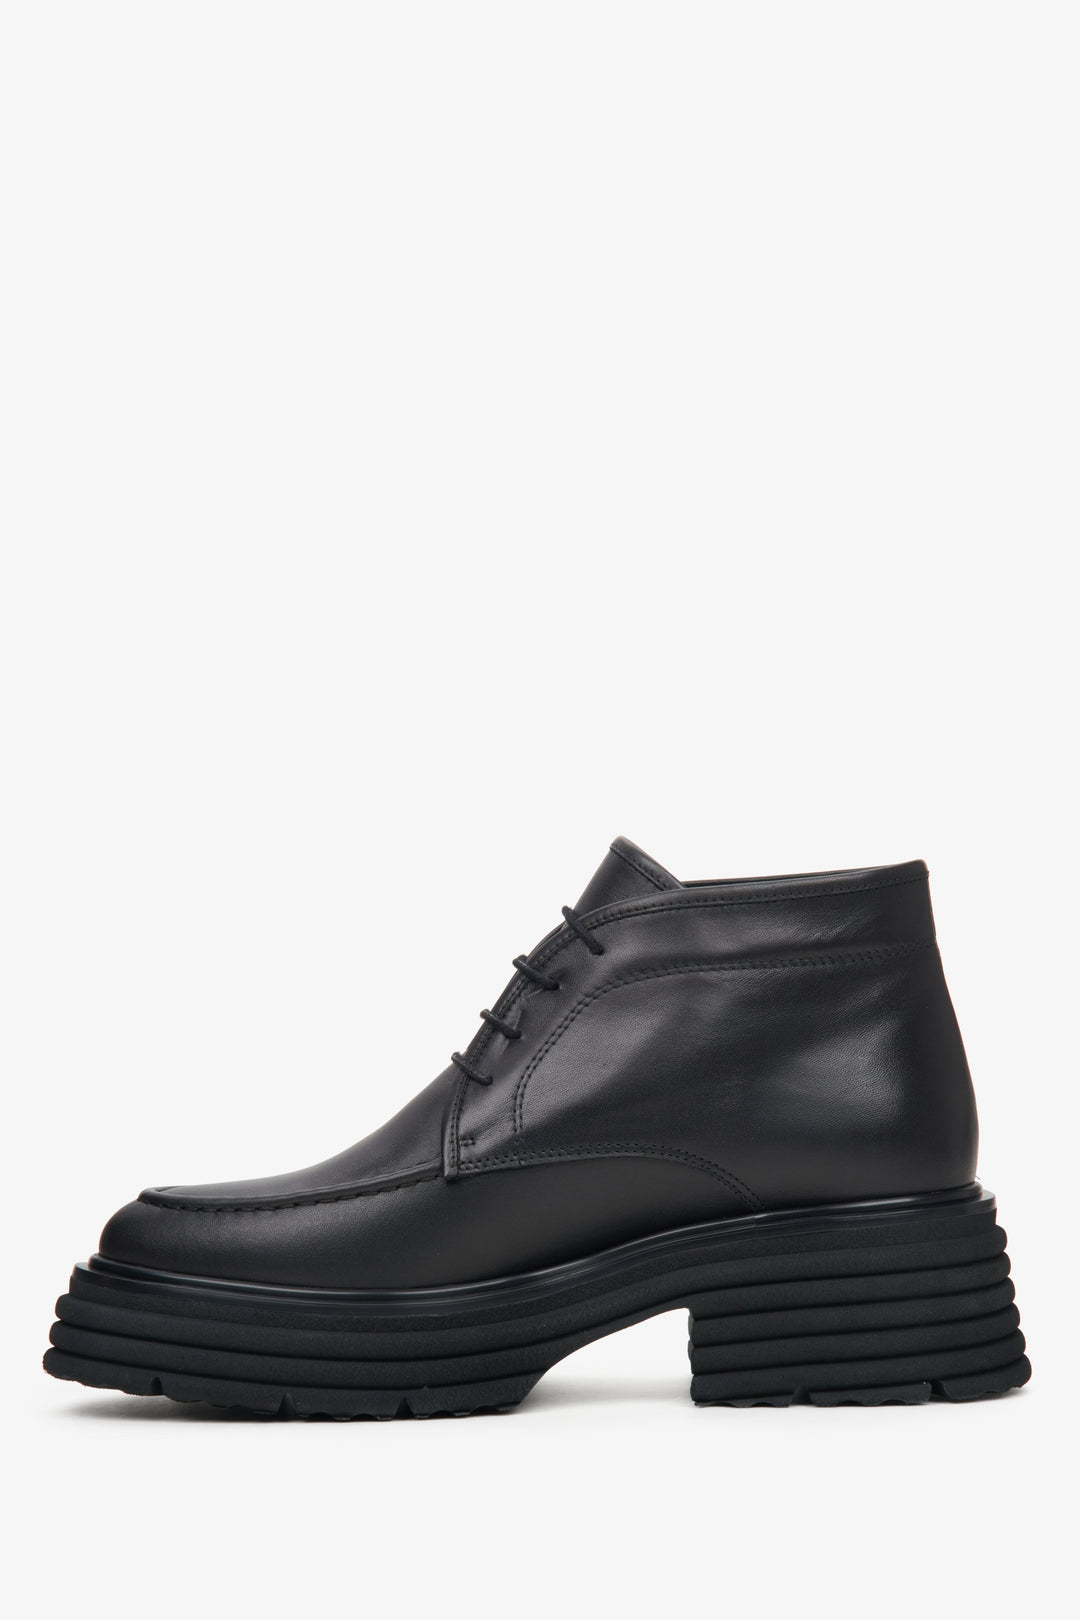 Women's black leather lace-up boots by Estro - shoe profile.